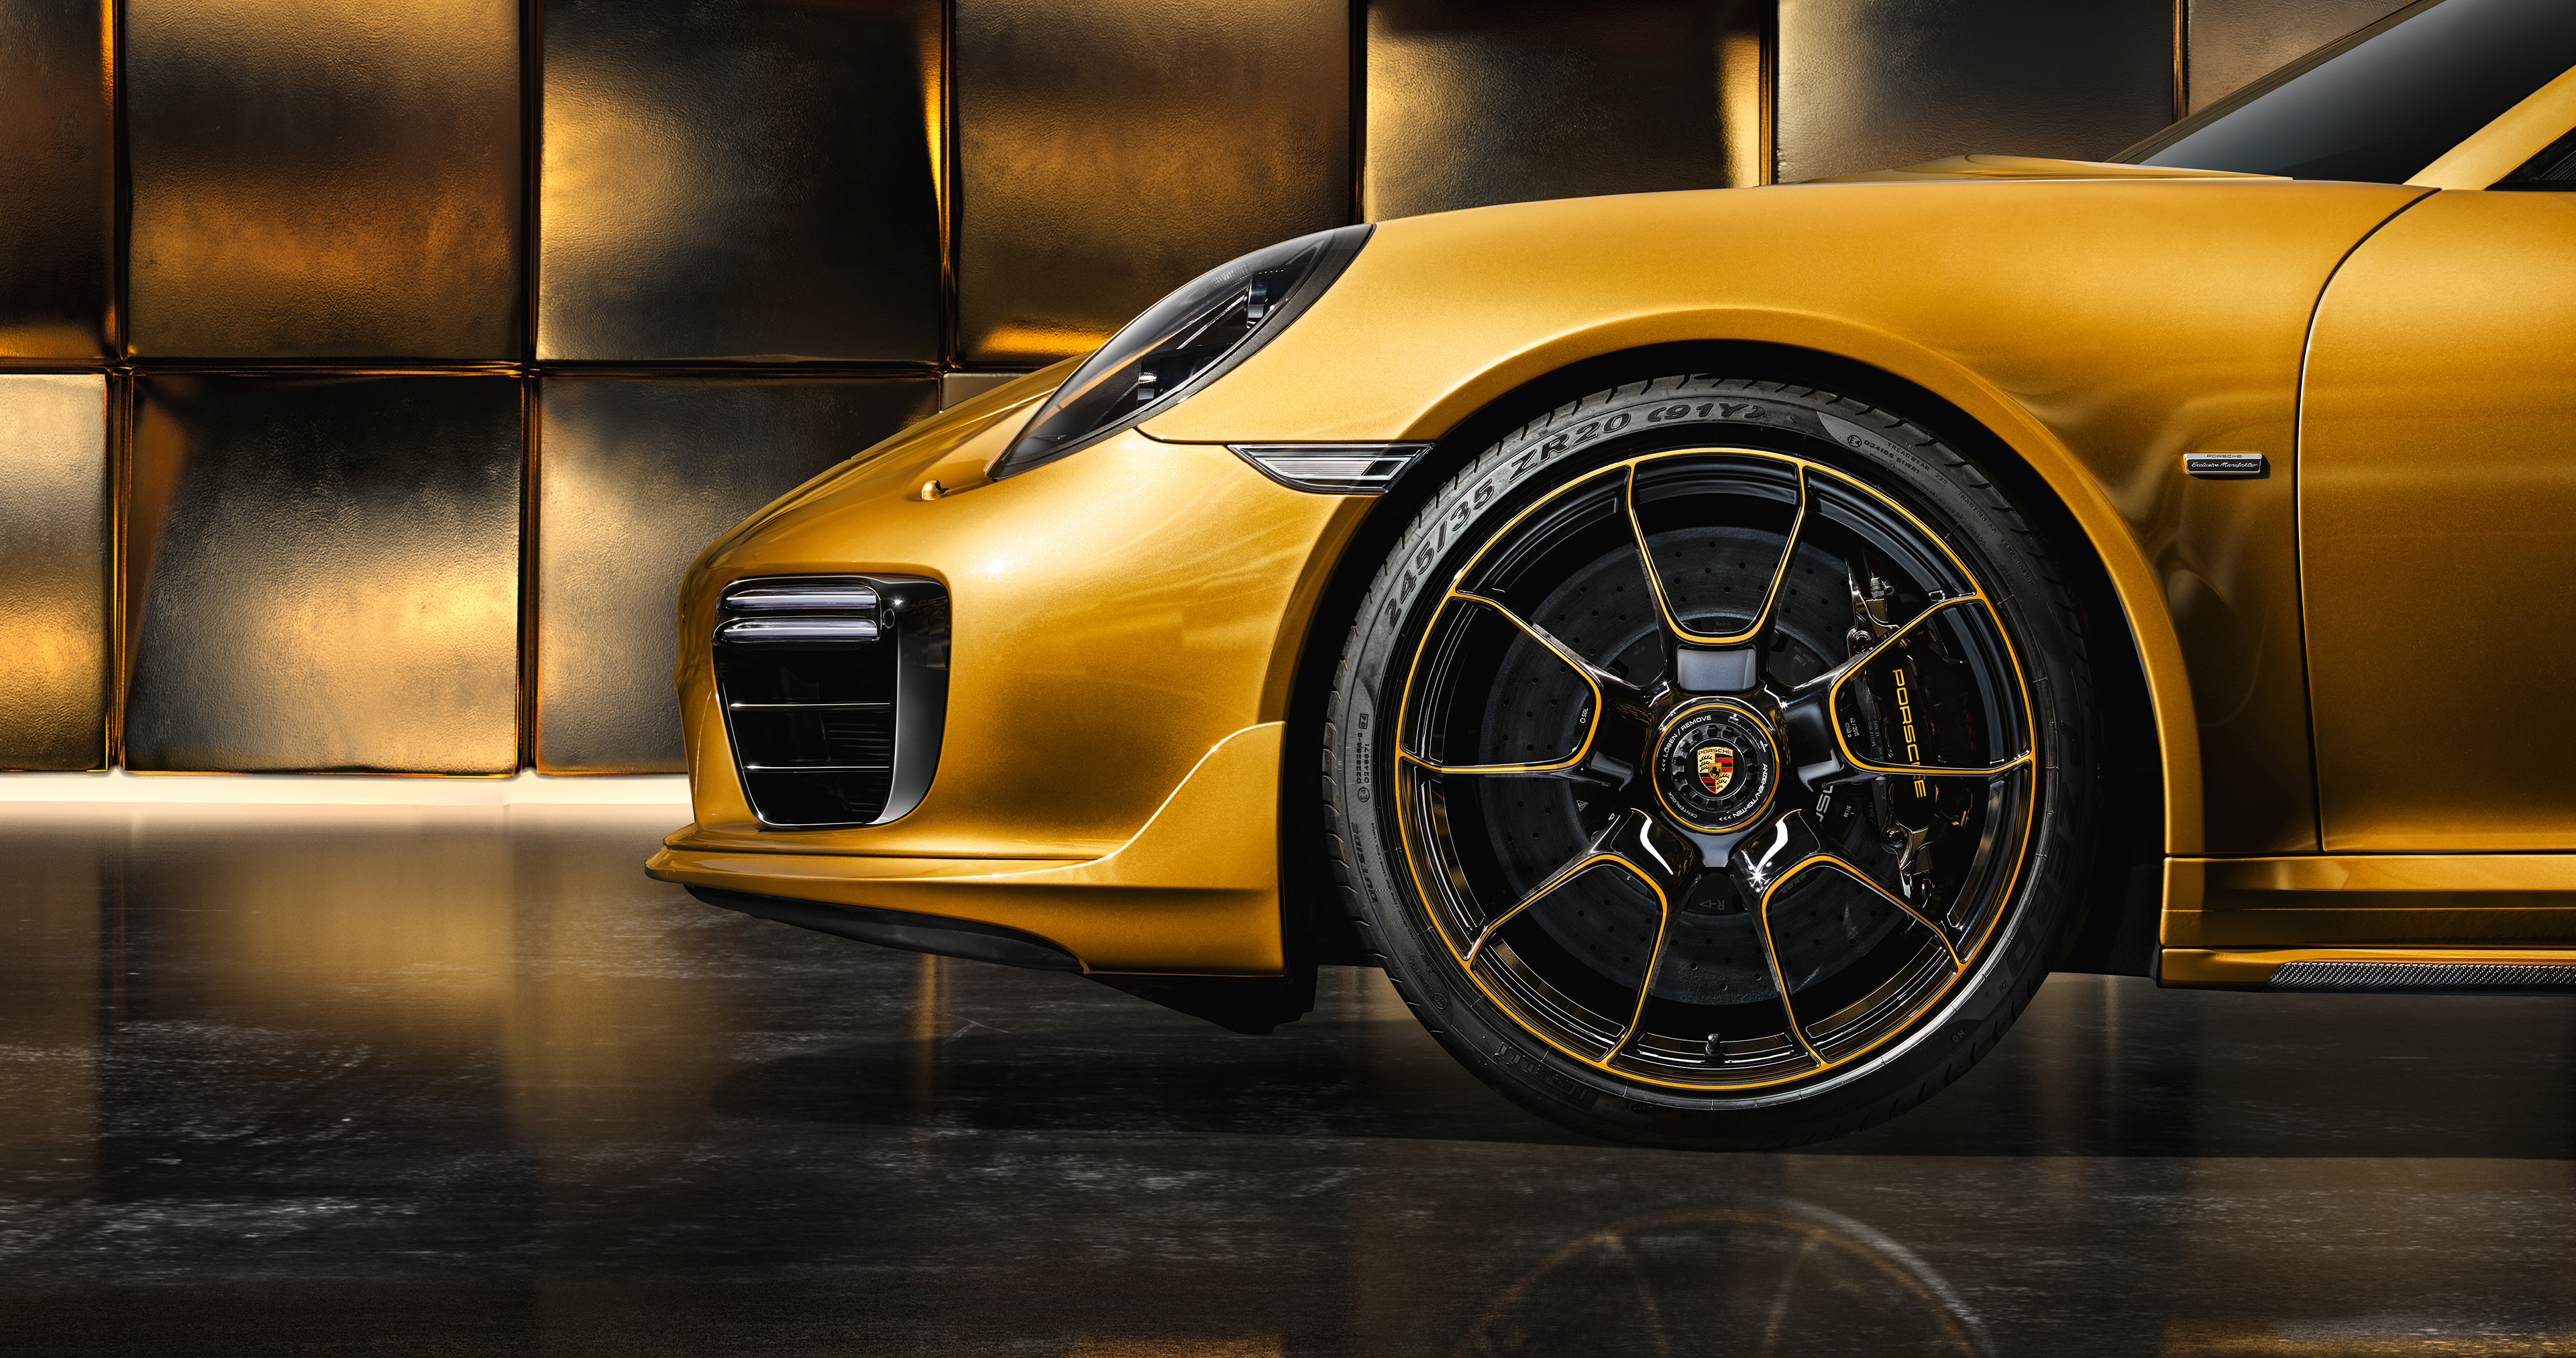 Wallpapers automobiles yellow car Porsche on the desktop